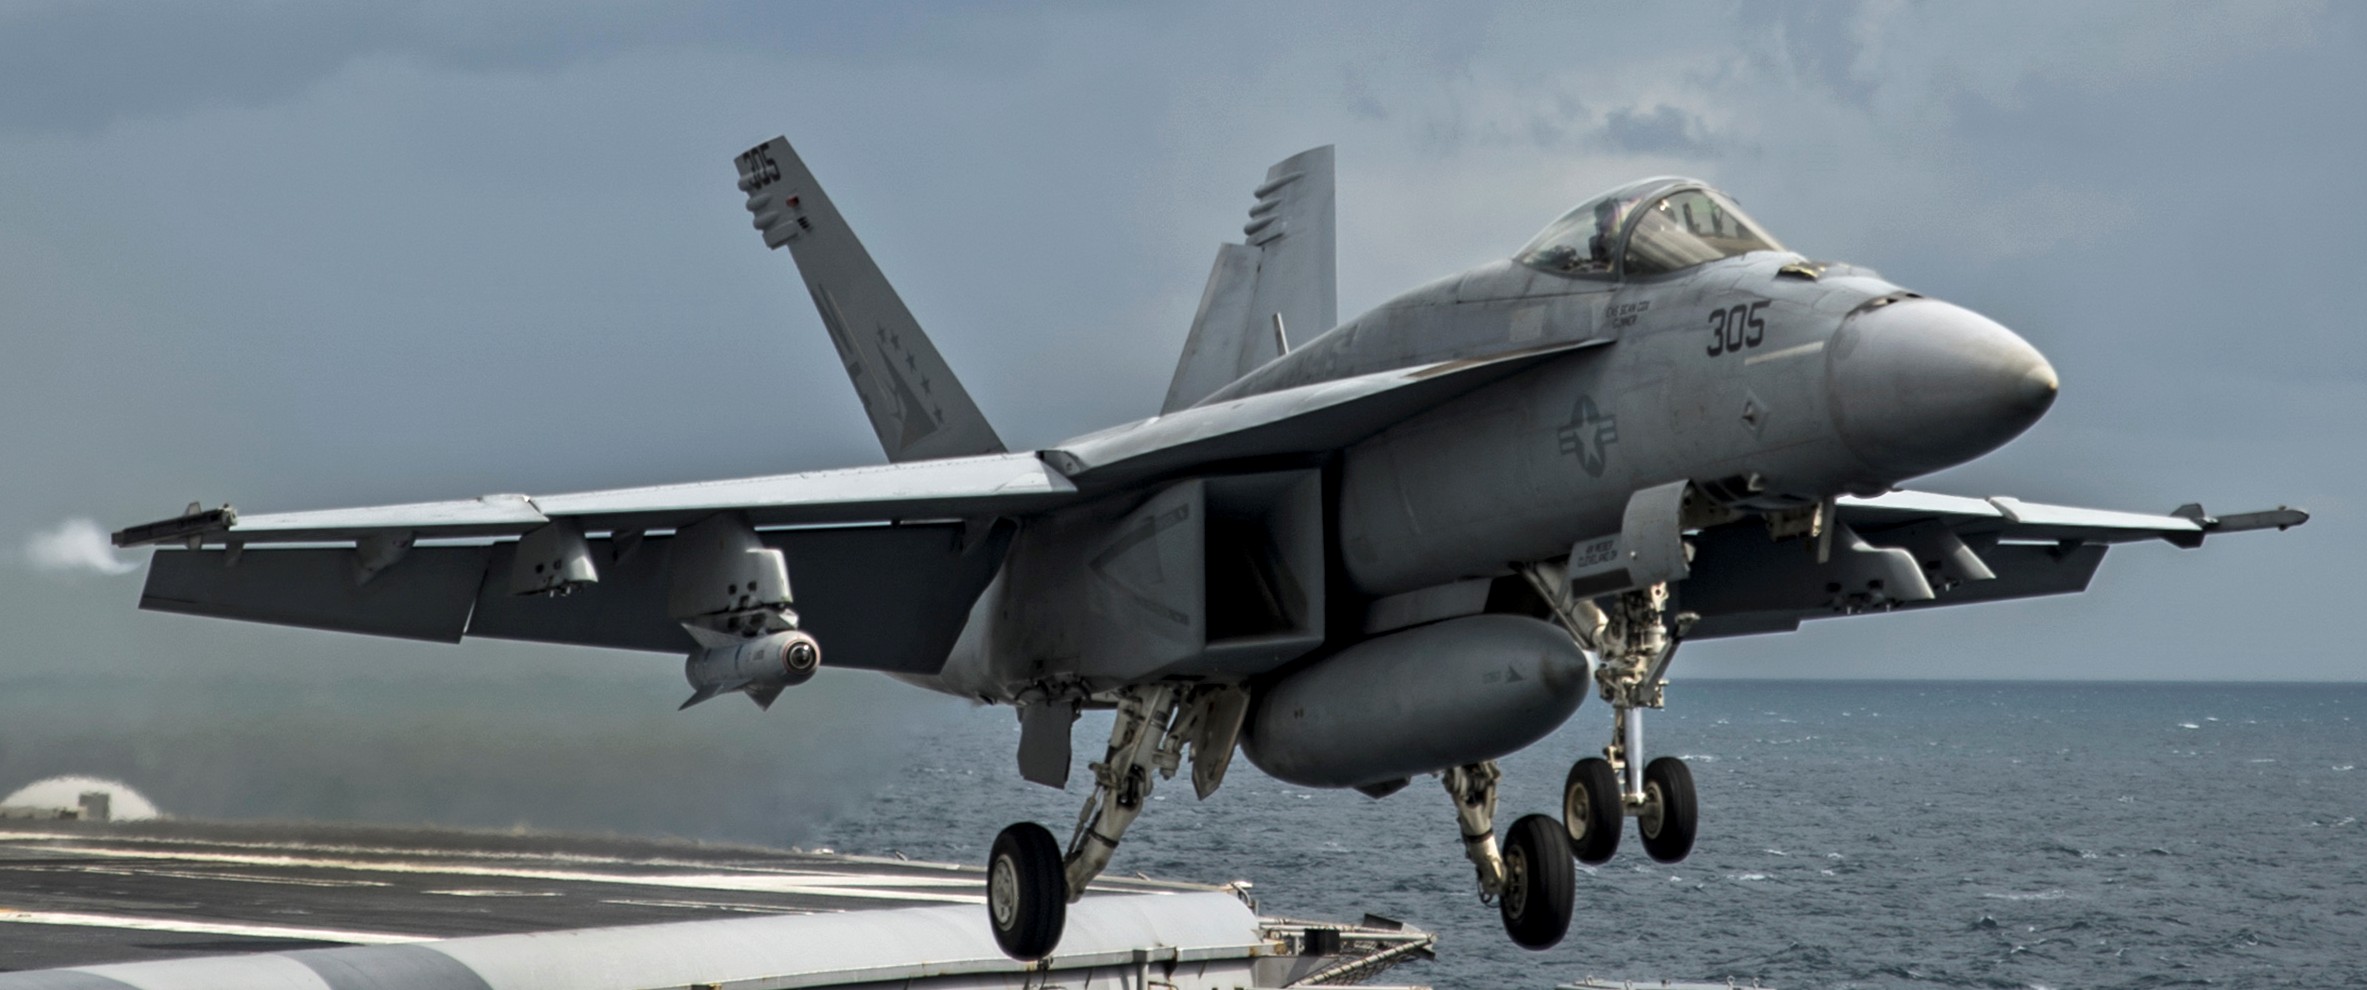 vfa-115 eagles strike fighter squadron f/a-18e super hornet cvw-5 uss george washington cvn-73 2015 18